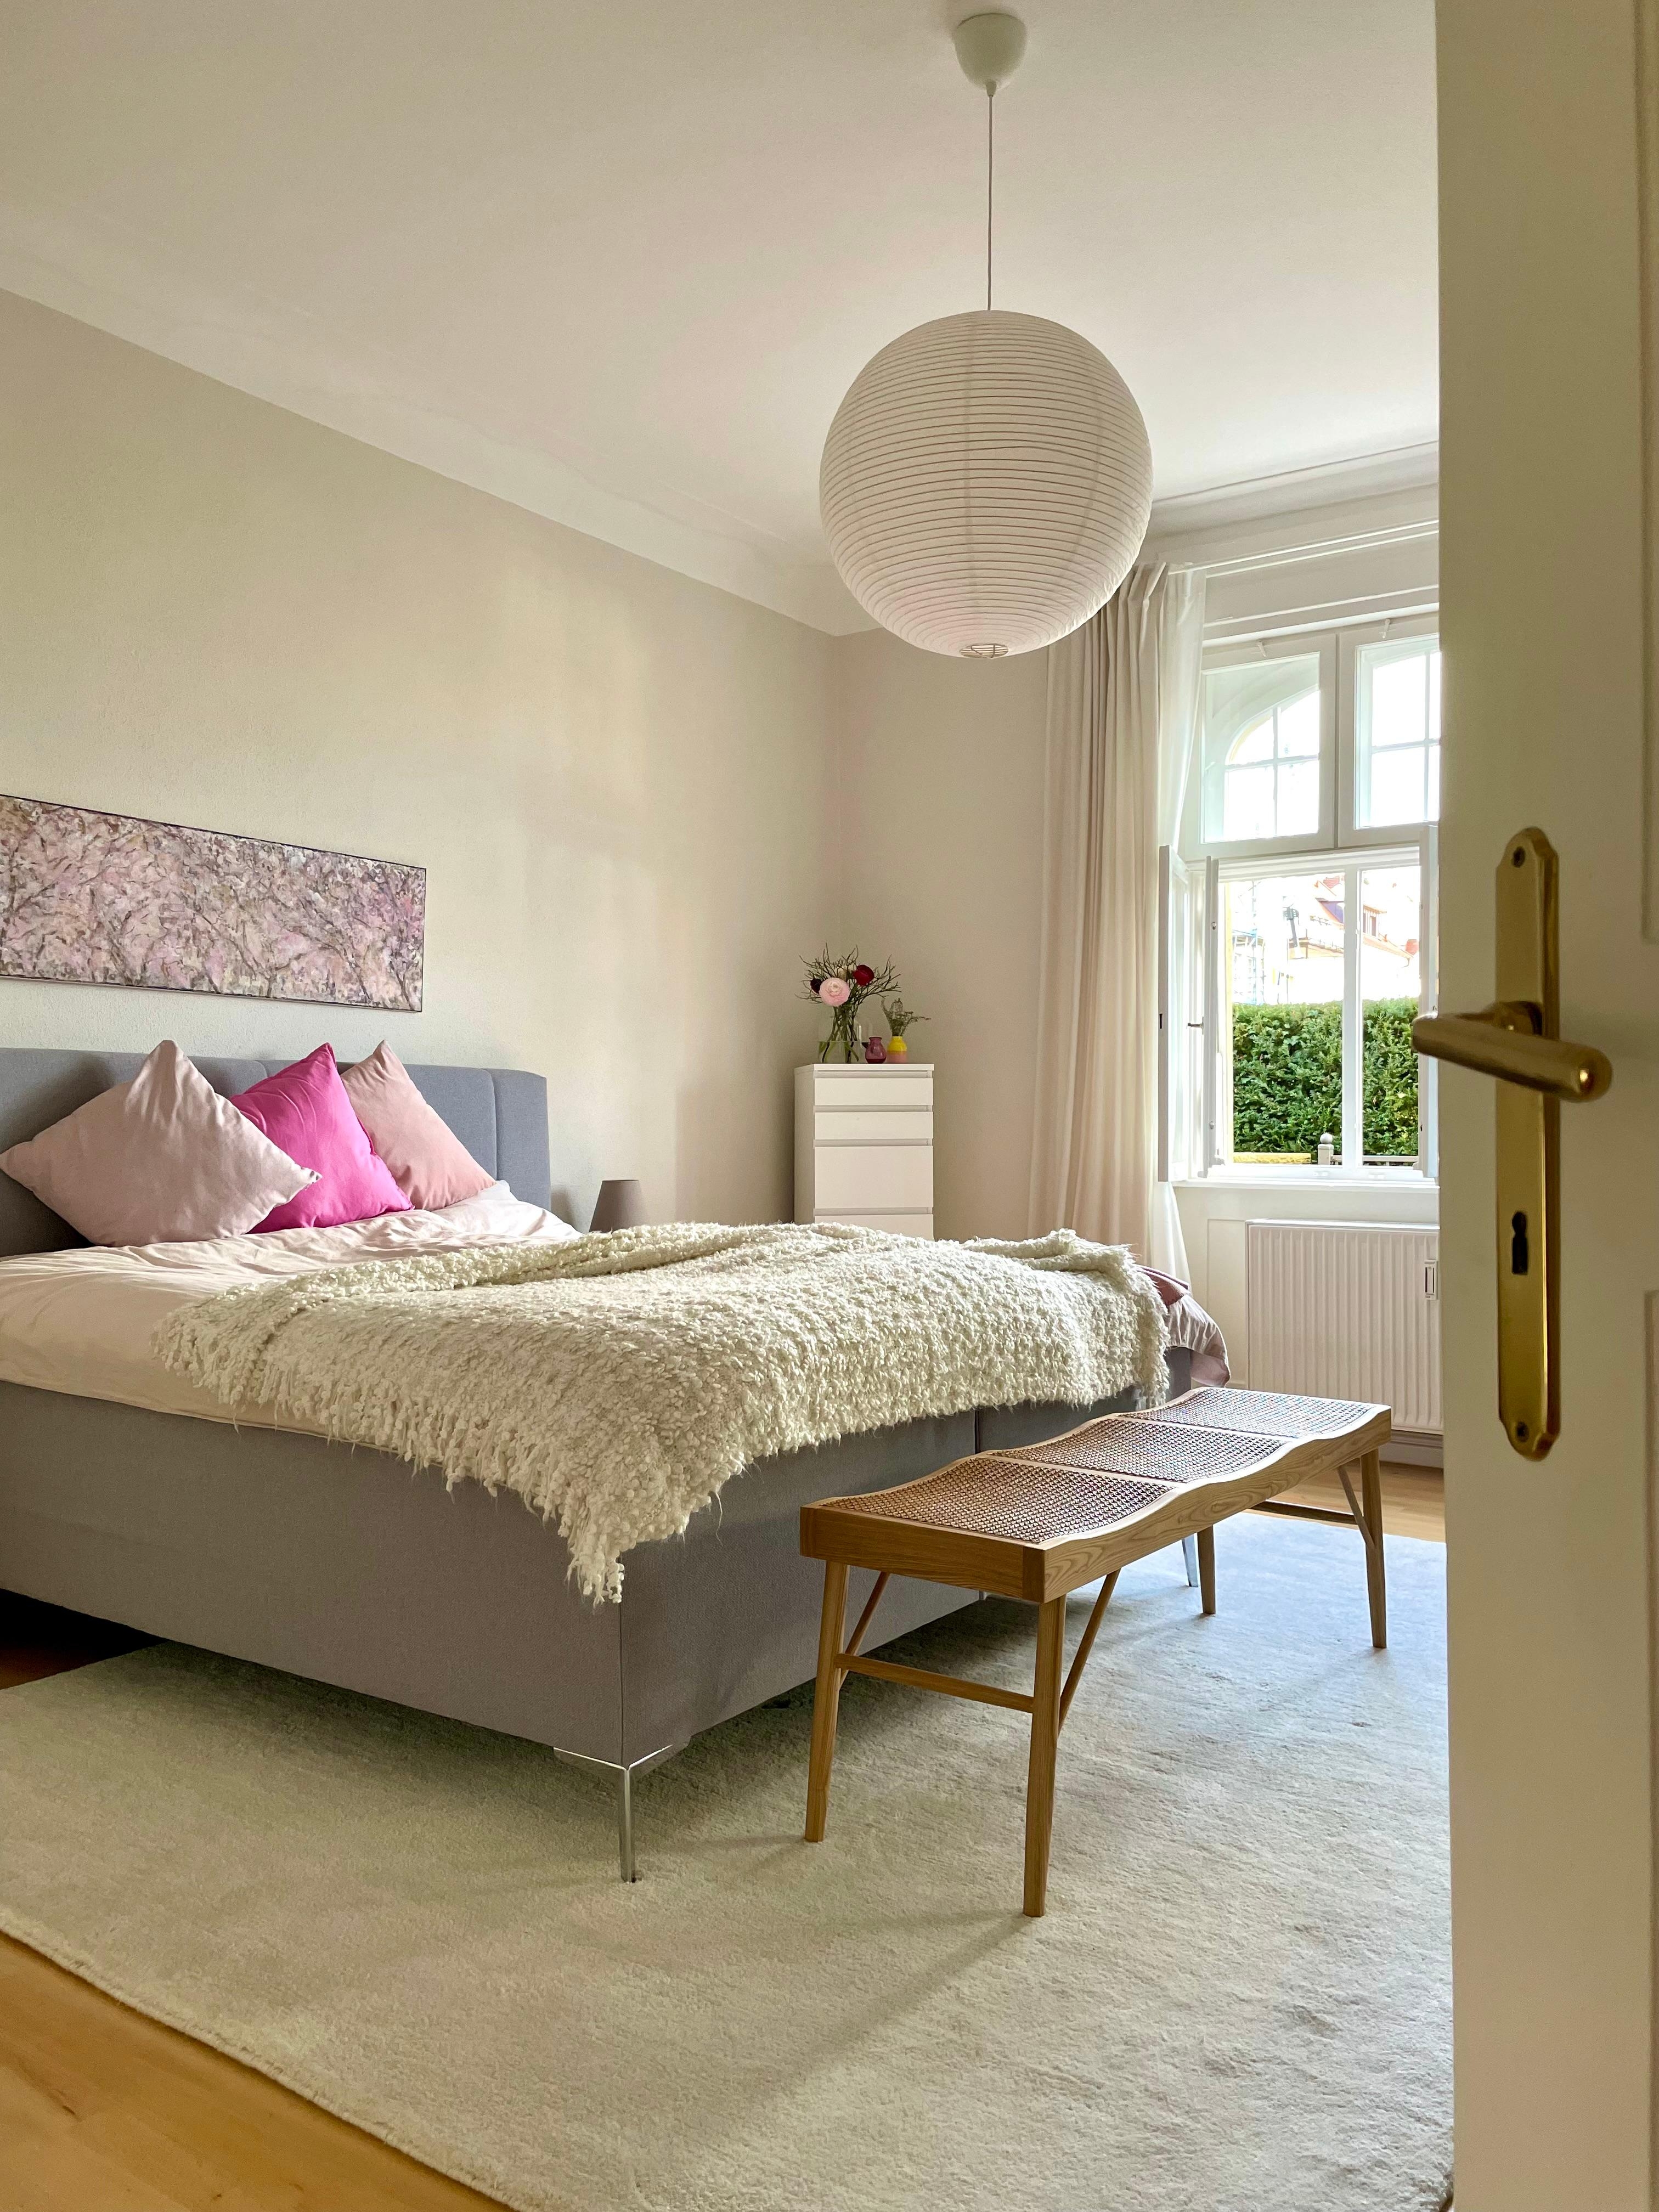 #schlafzimmer #bedroom #frühling #pastell #rosa #farbenfroh #altbau #altbauliebe